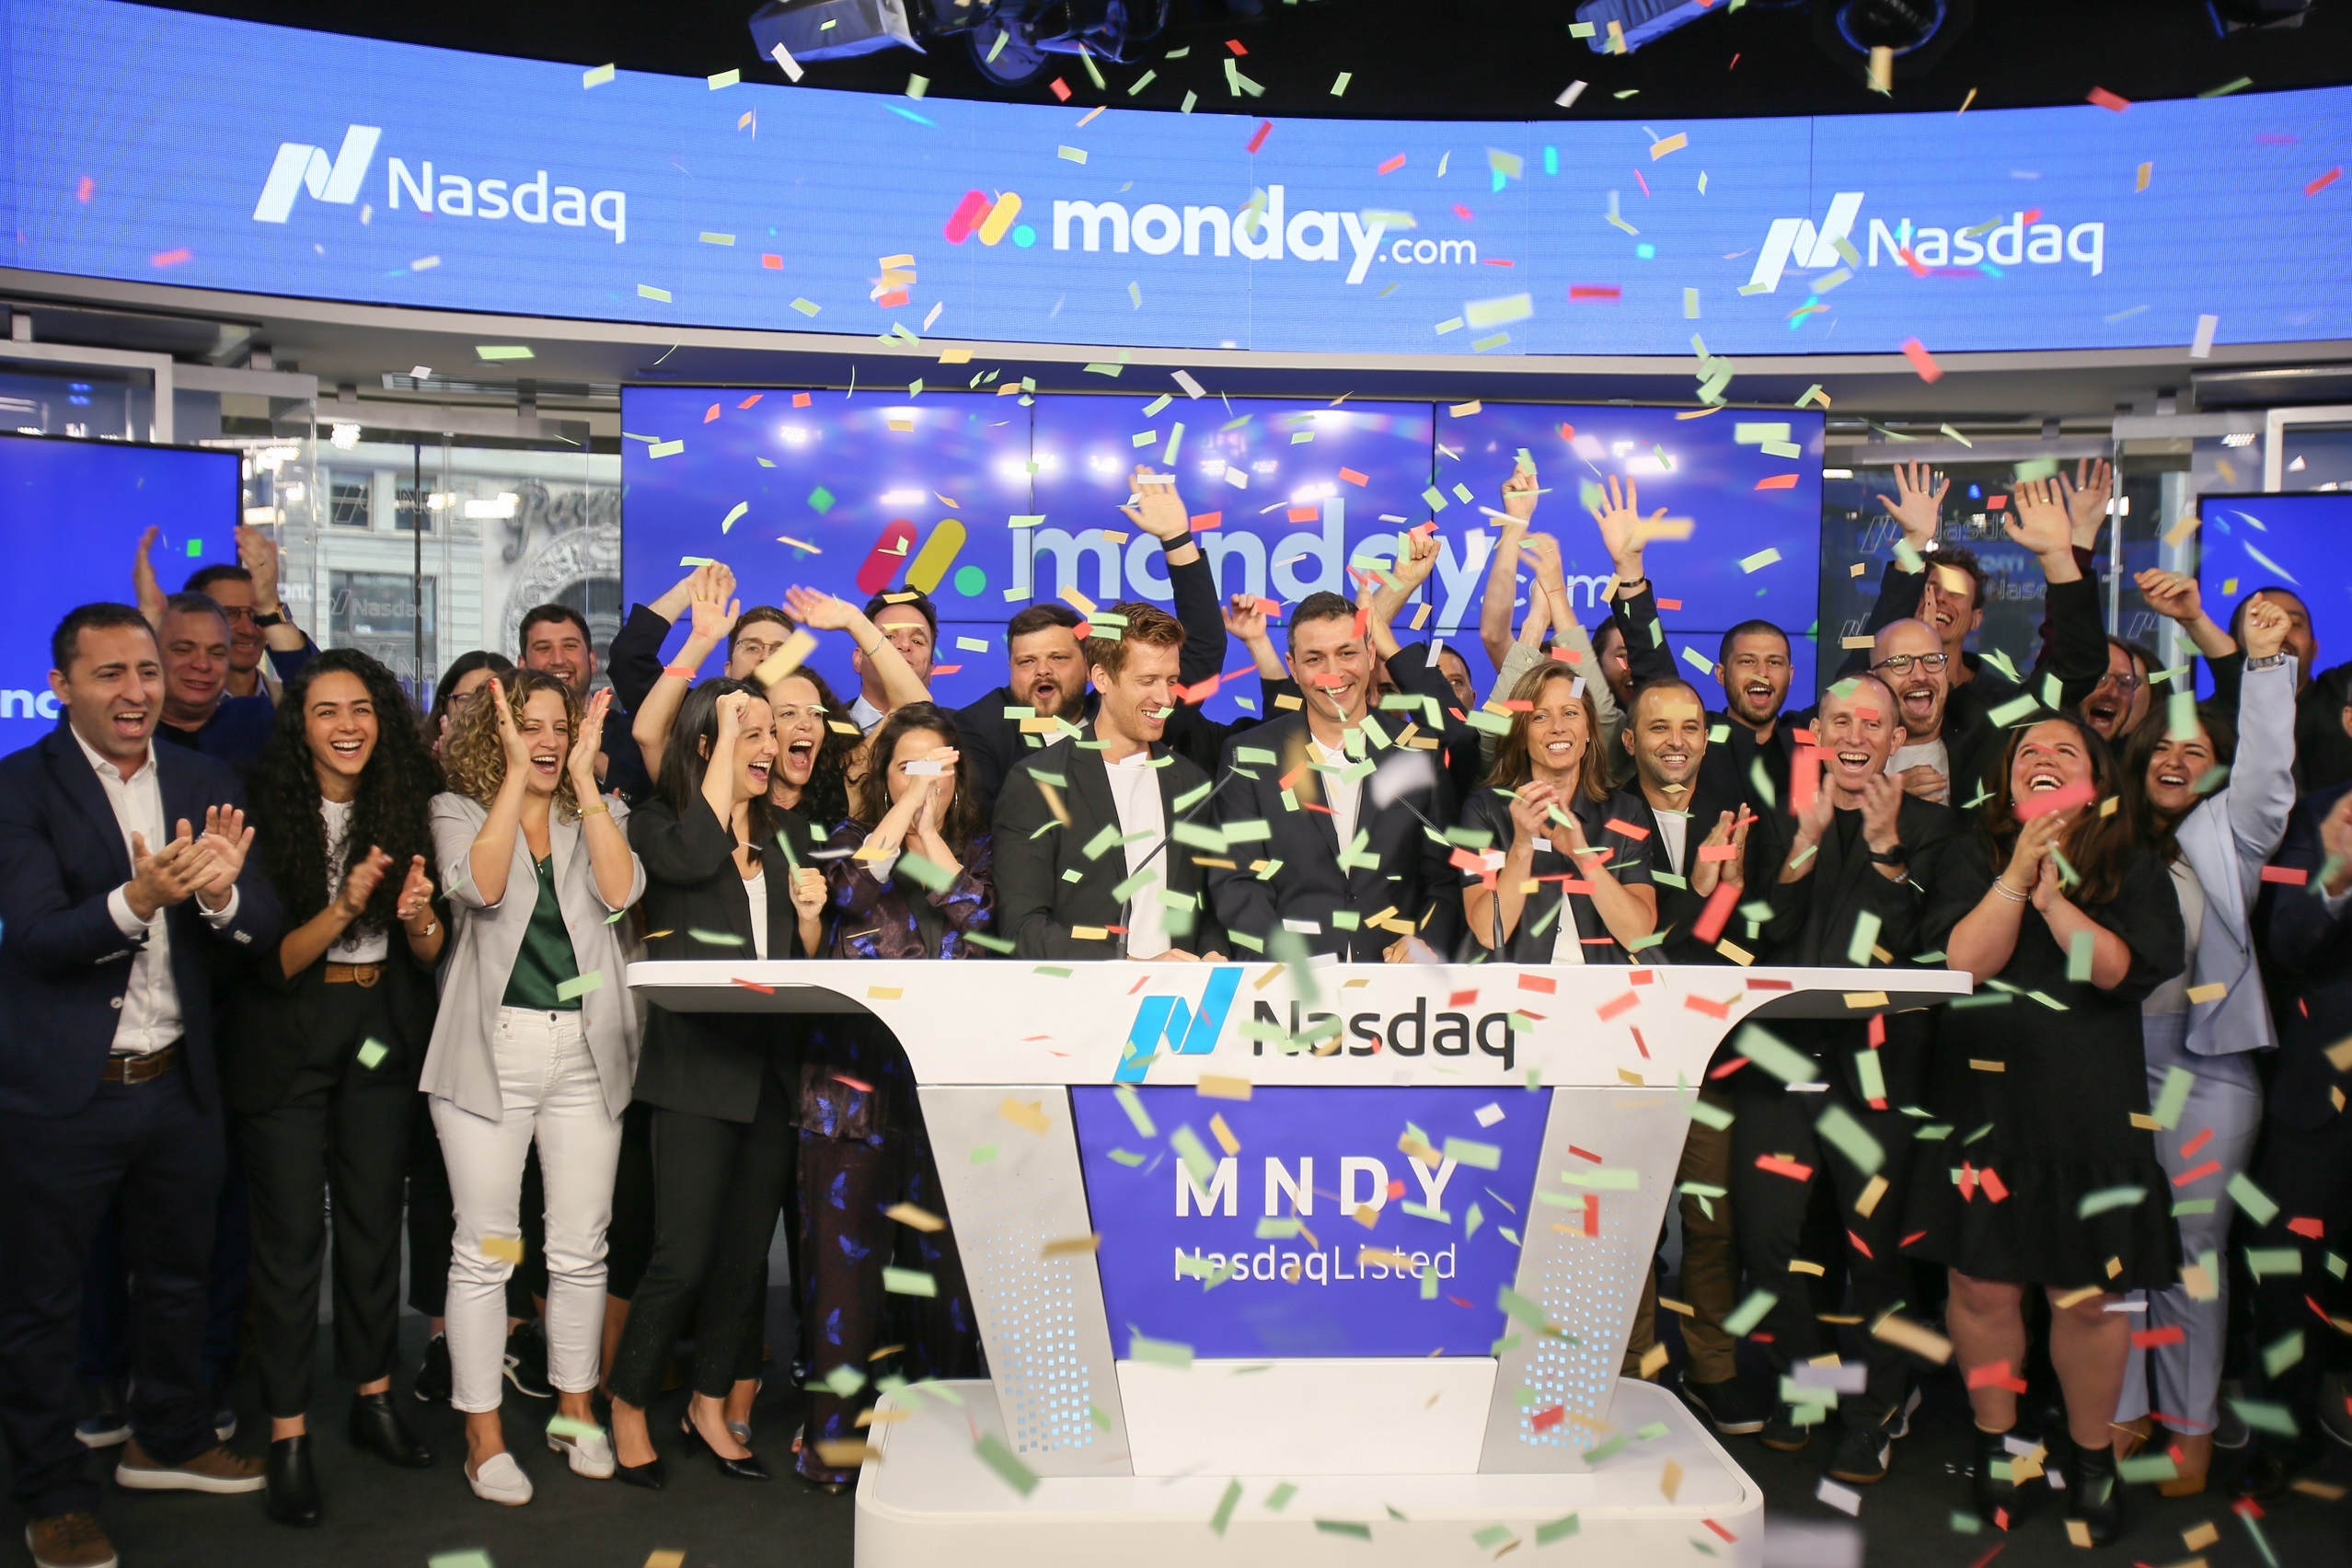 monday.com managing team open Nasdaq trade following Thursday